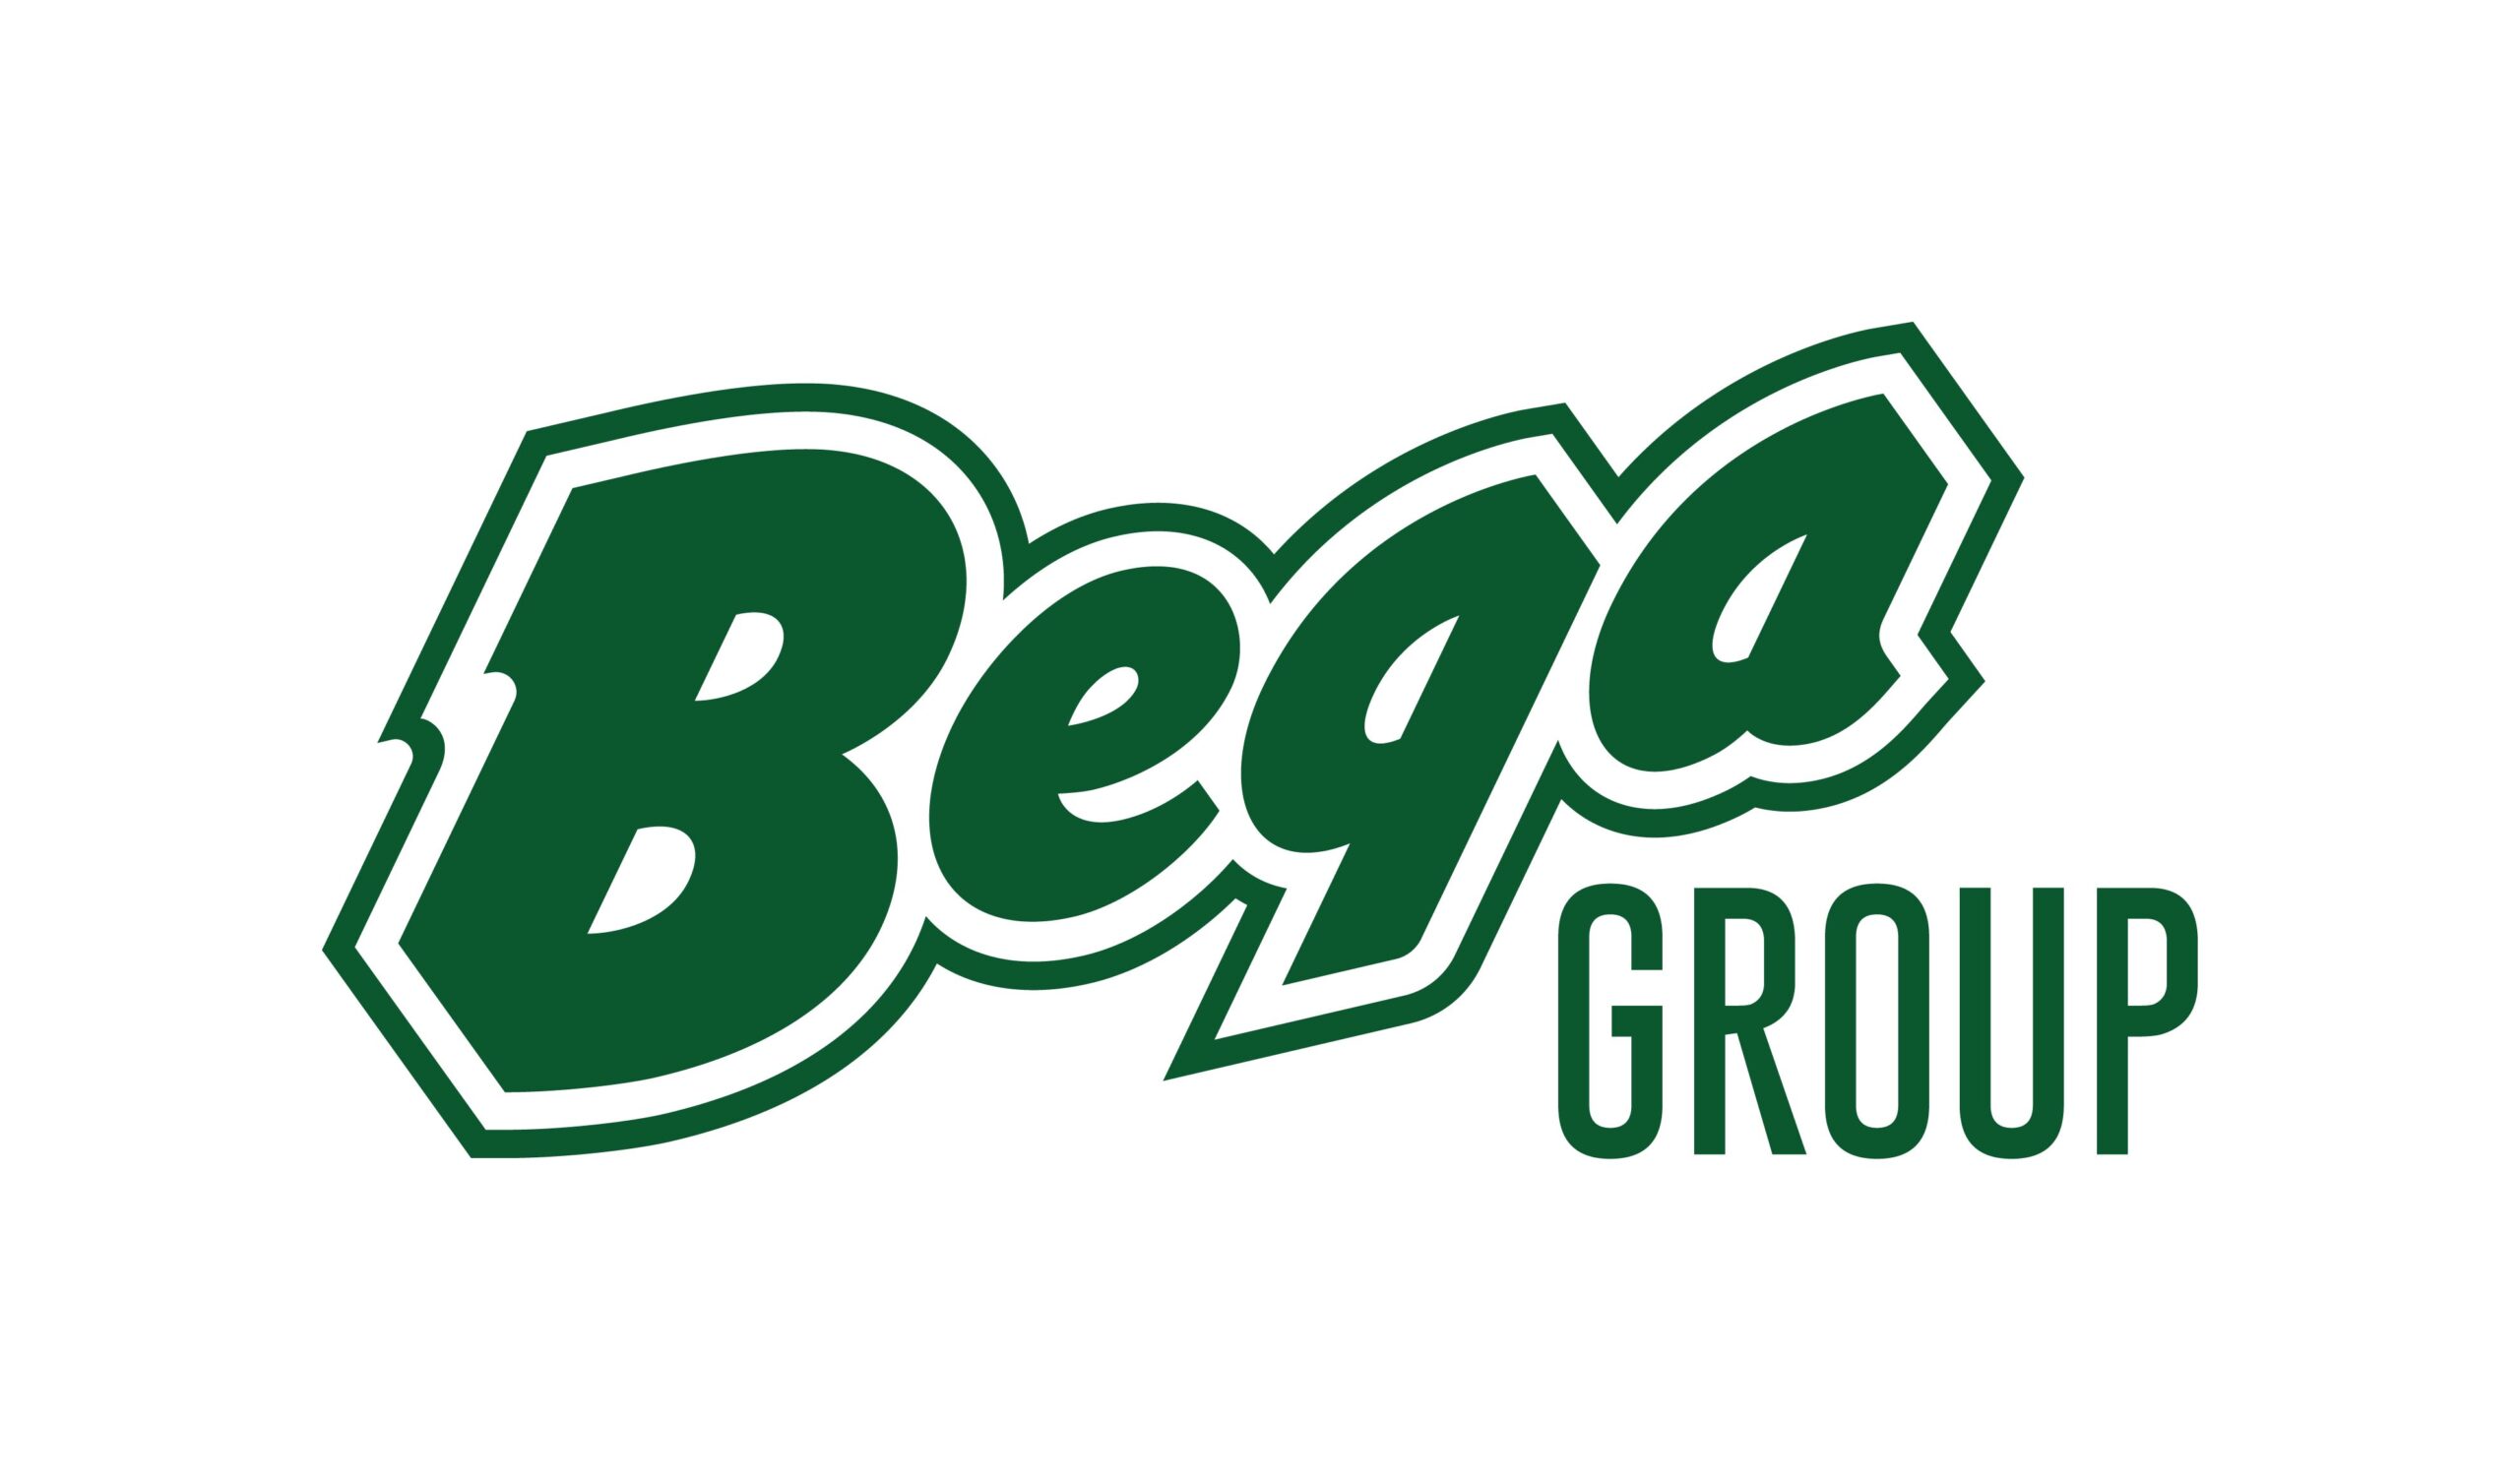 Bega Group